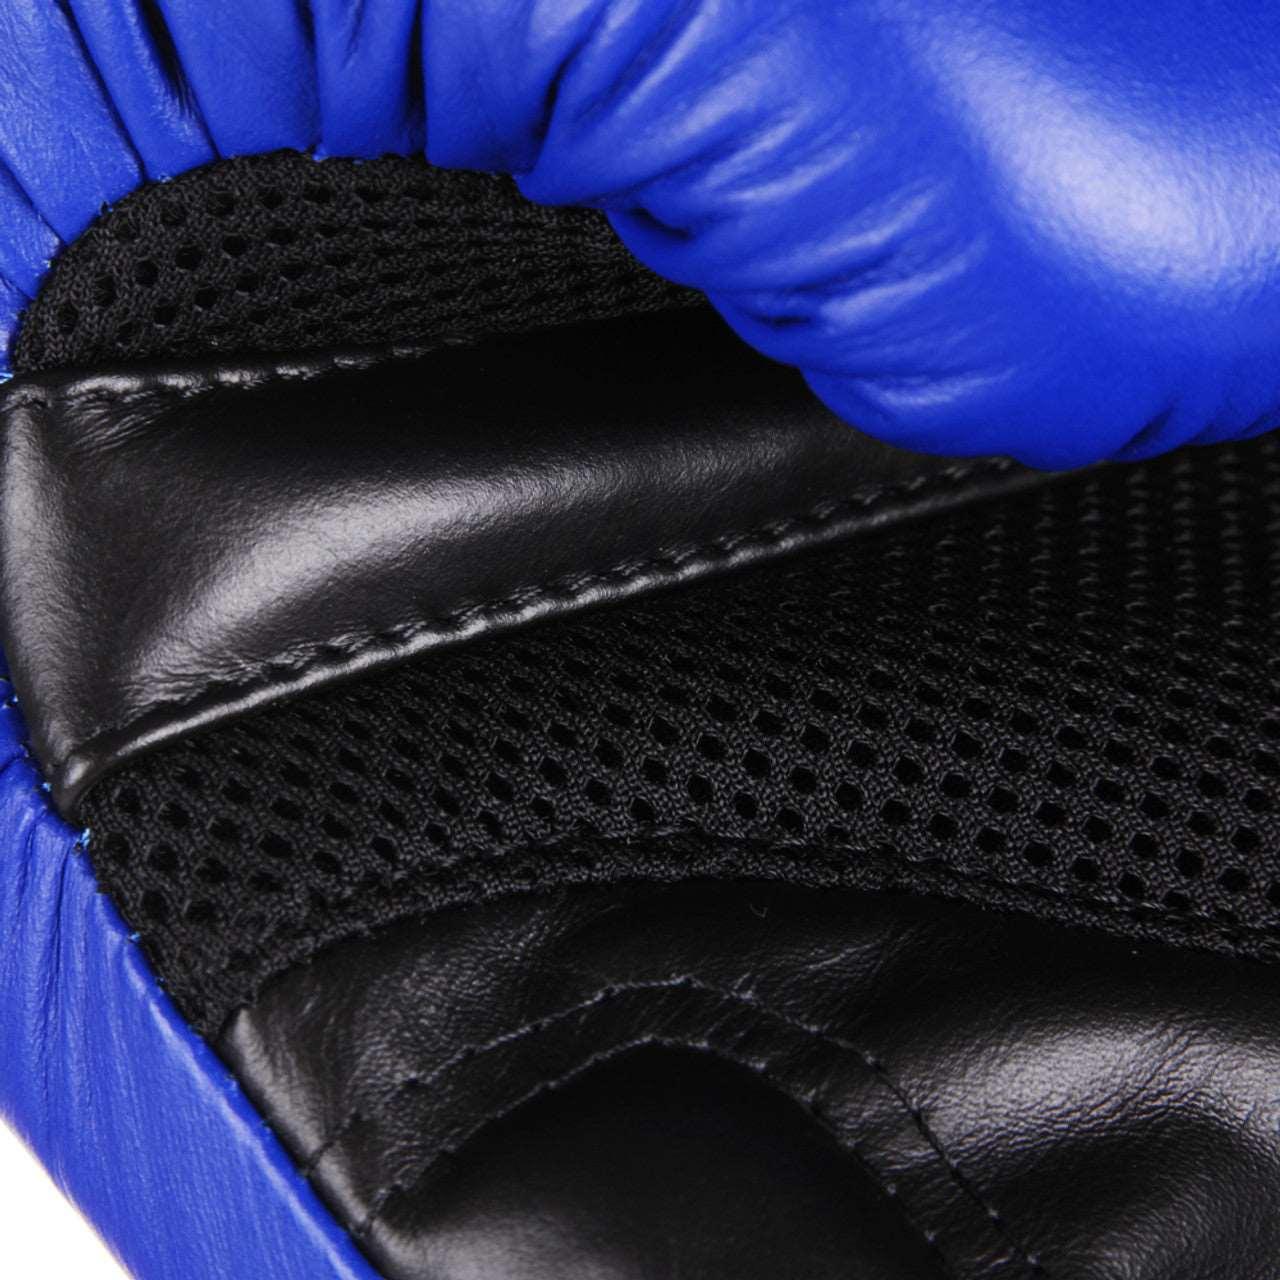 Original Thai Boxing Gloves - Blue - Violent Art Shop